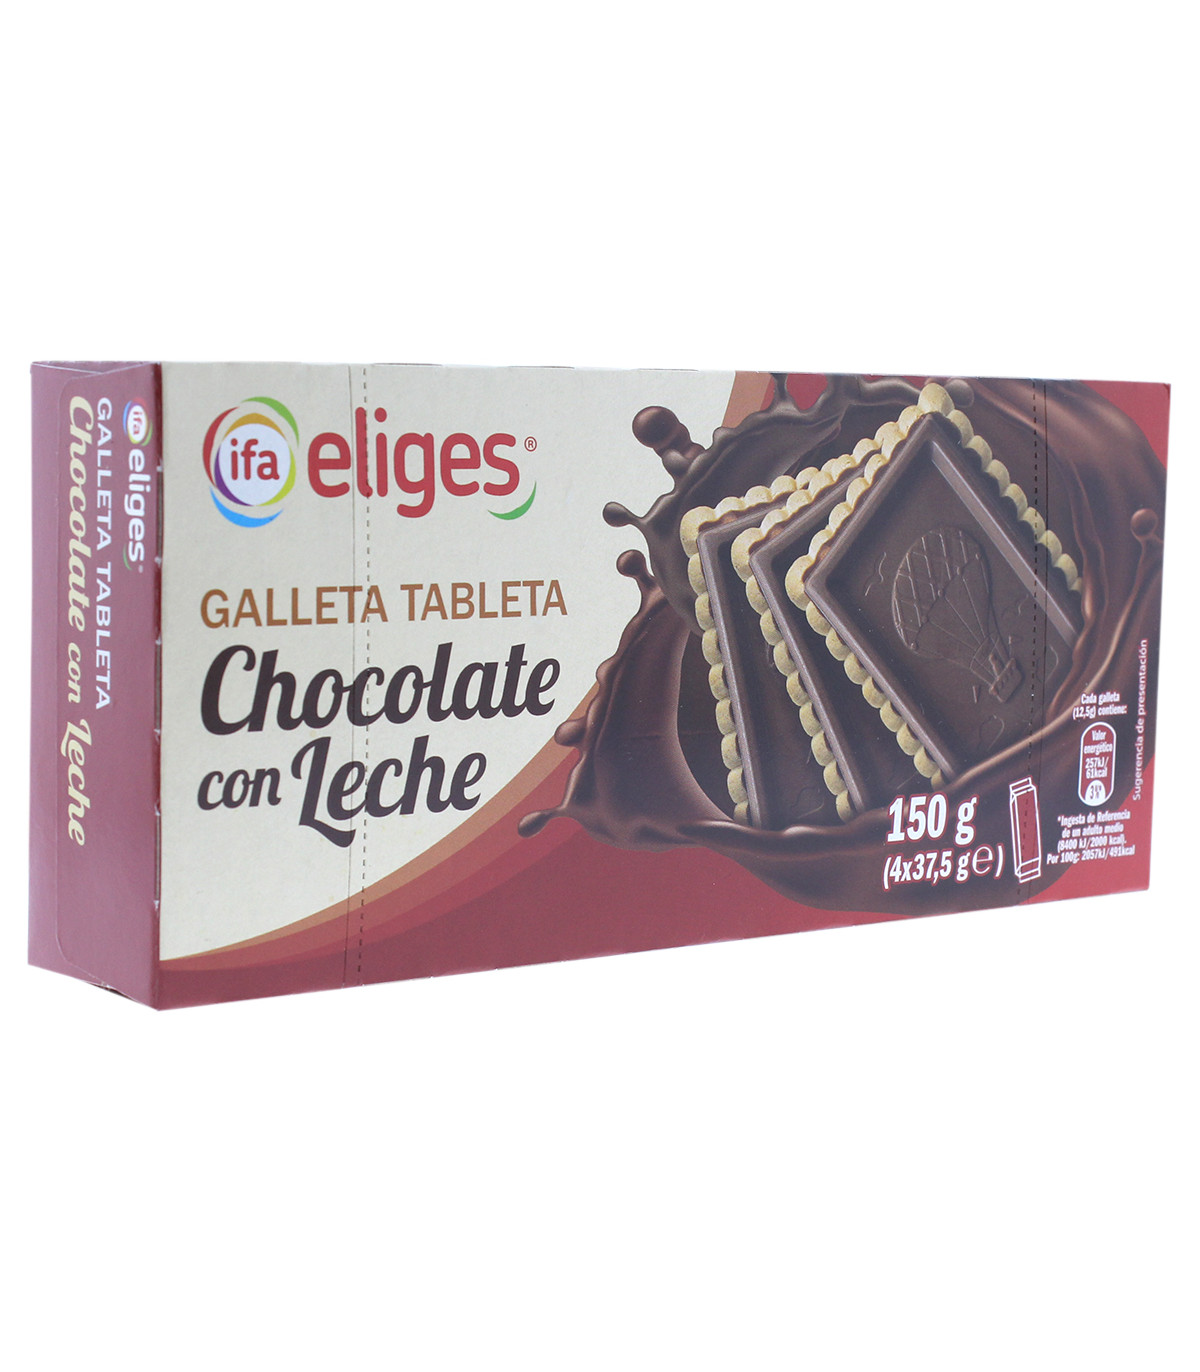 GALLETA TABLETA CHOCOLATE CON LECHE IFA ELIGES 150 g.